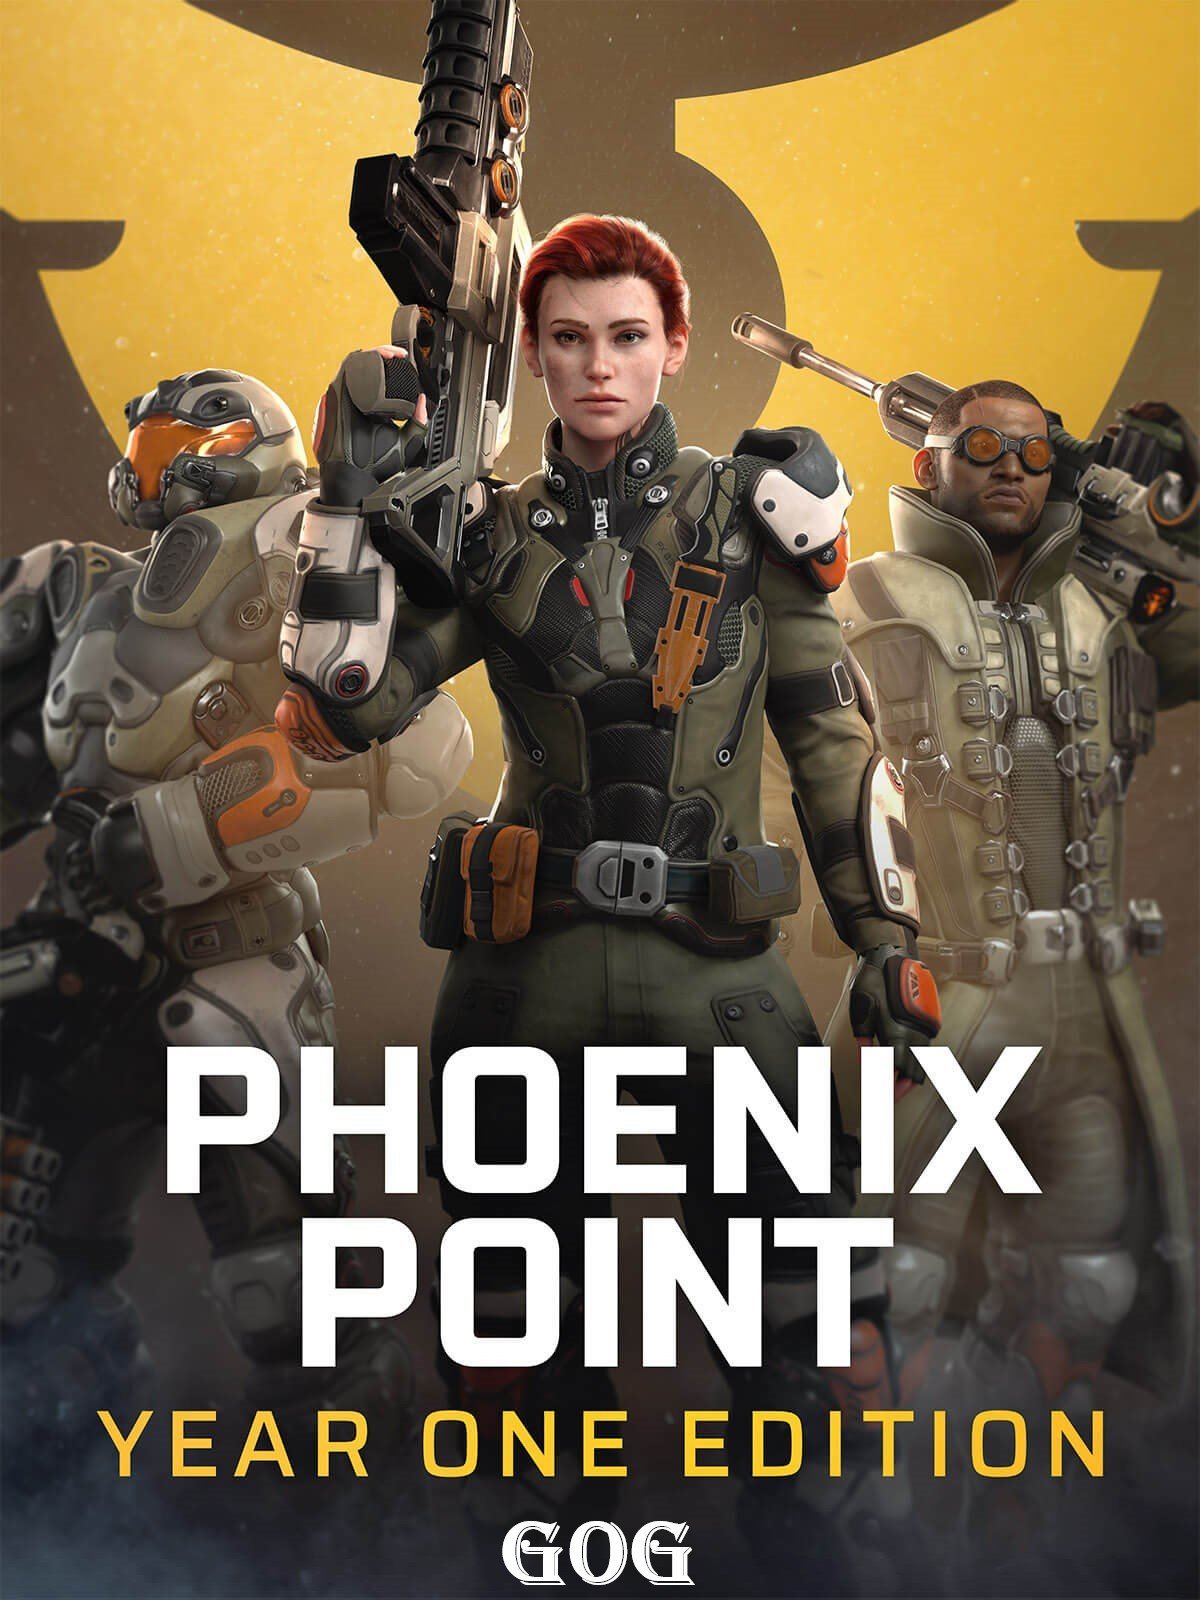 Phoenix Point: Year One Edition v.1.10 [GOG] (2019) Лицензия (2019)